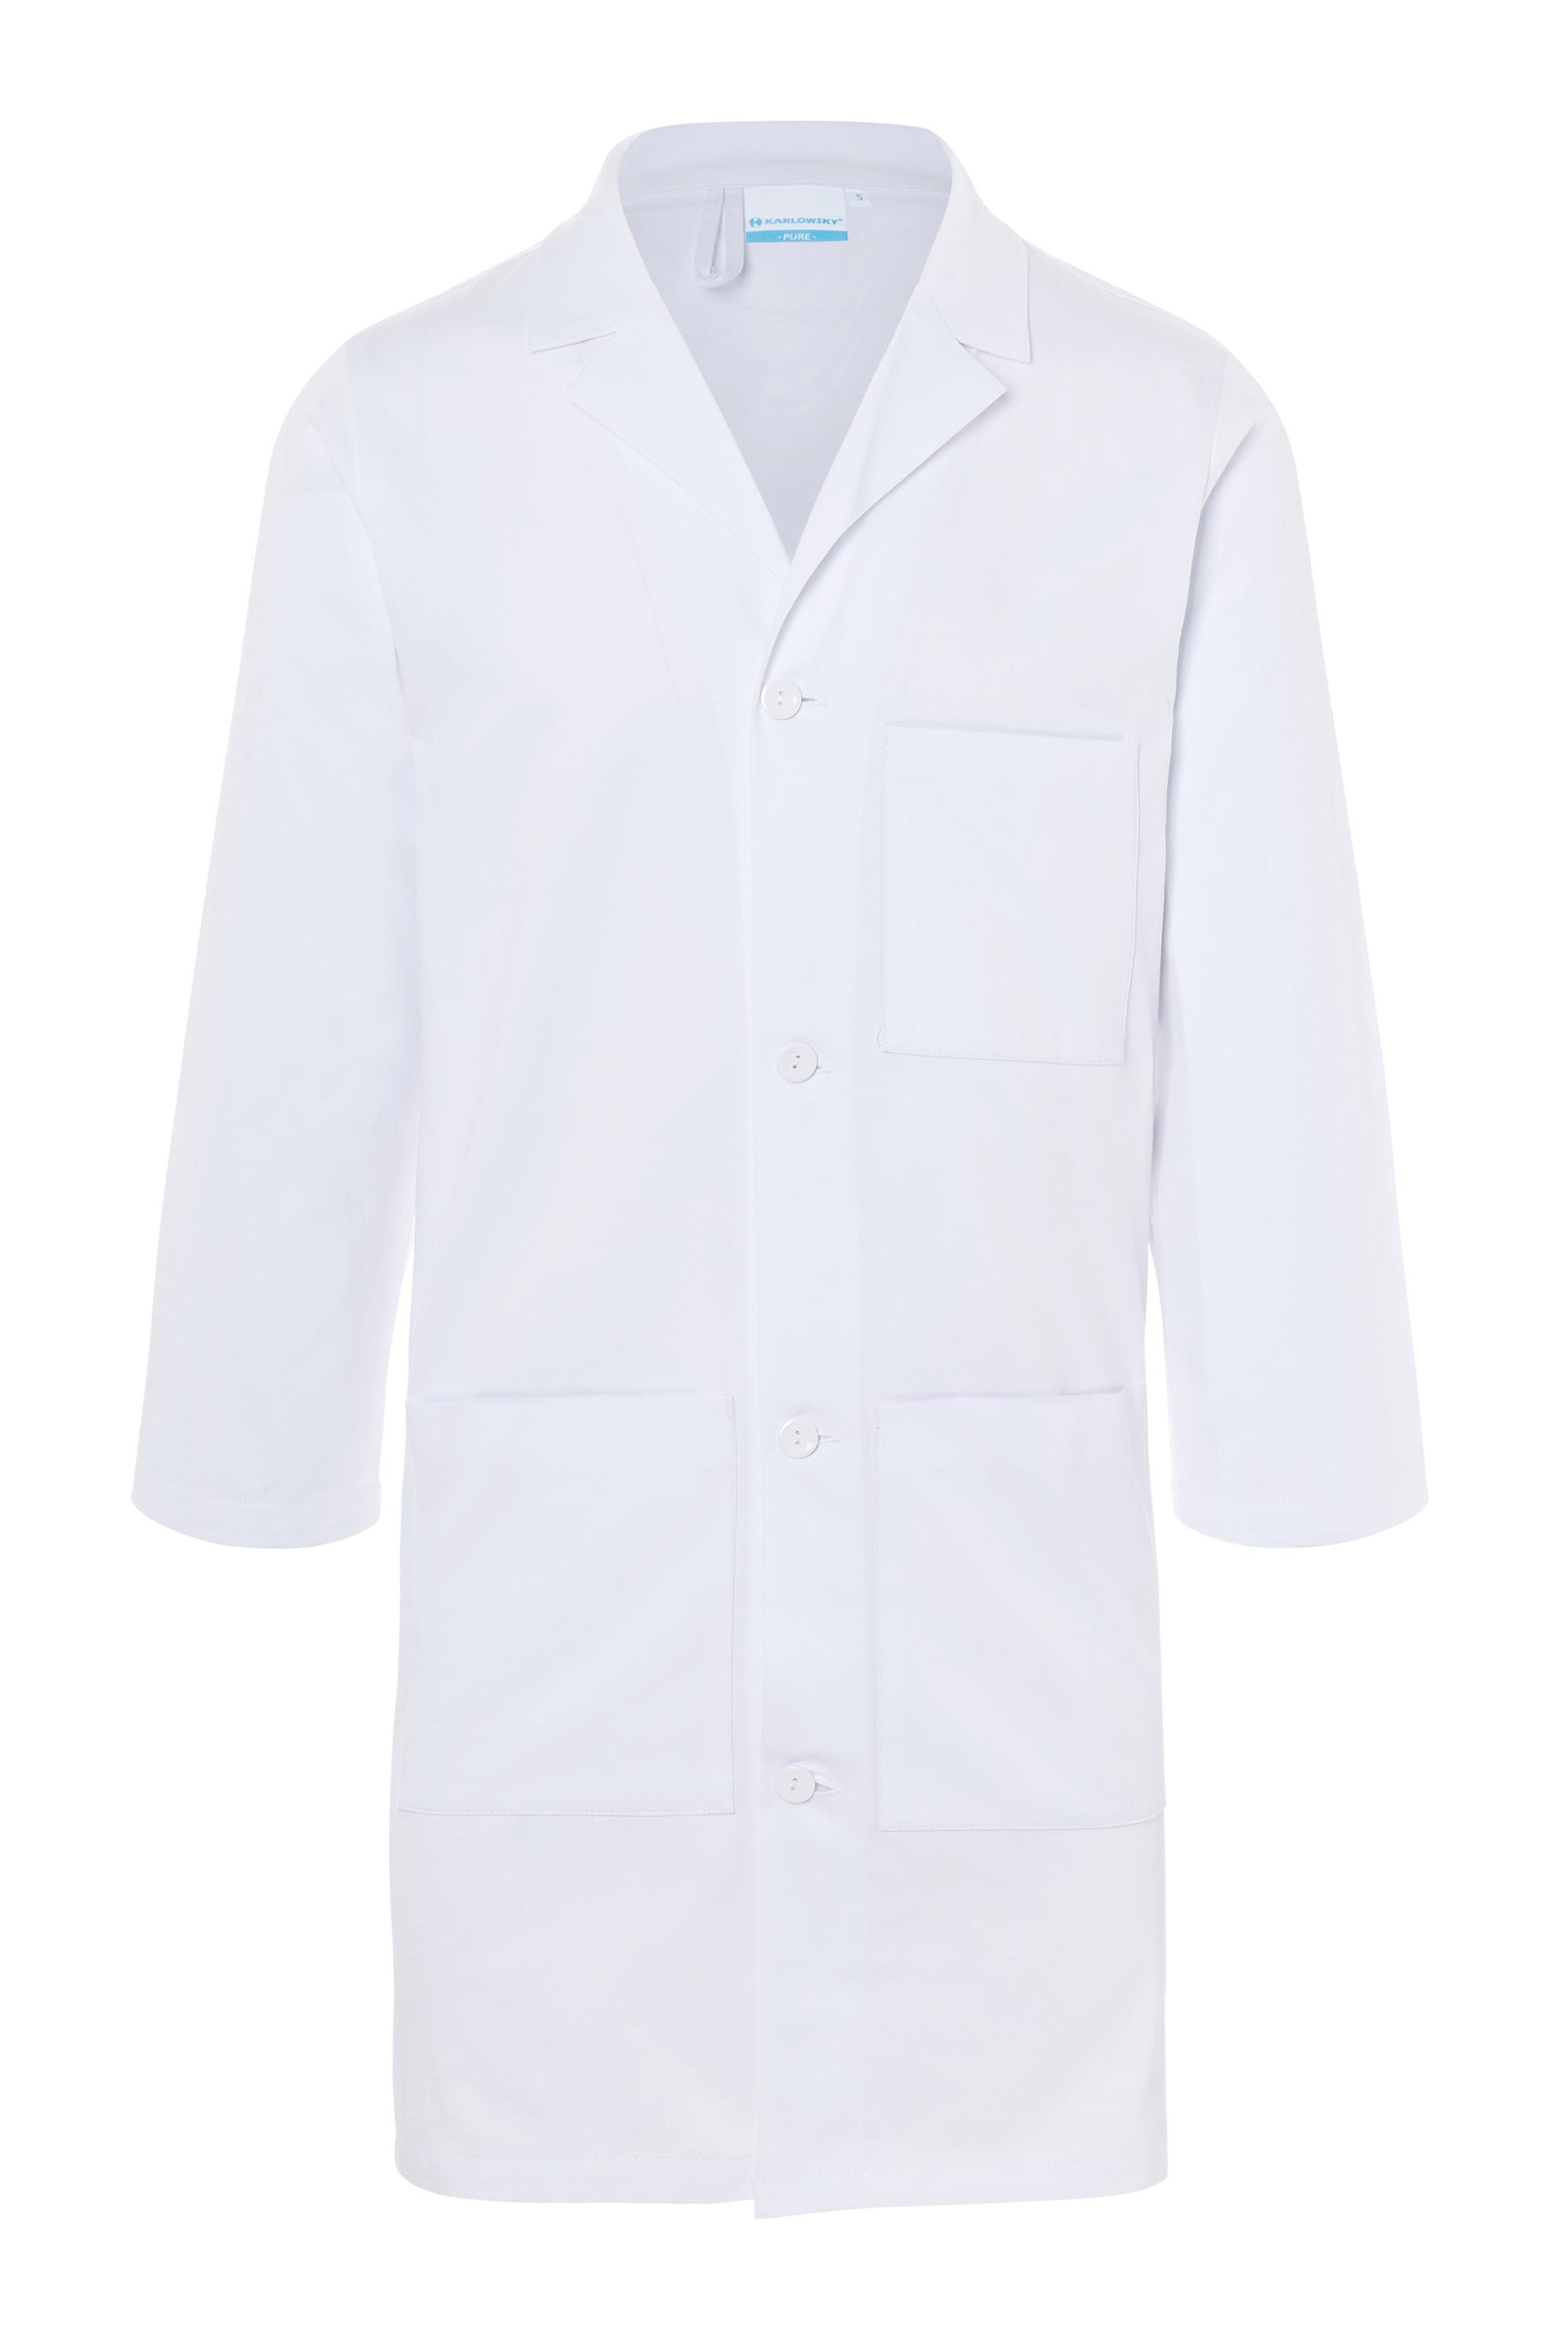 Men's lab coat cotton Karlowsky® white 3XL (66)